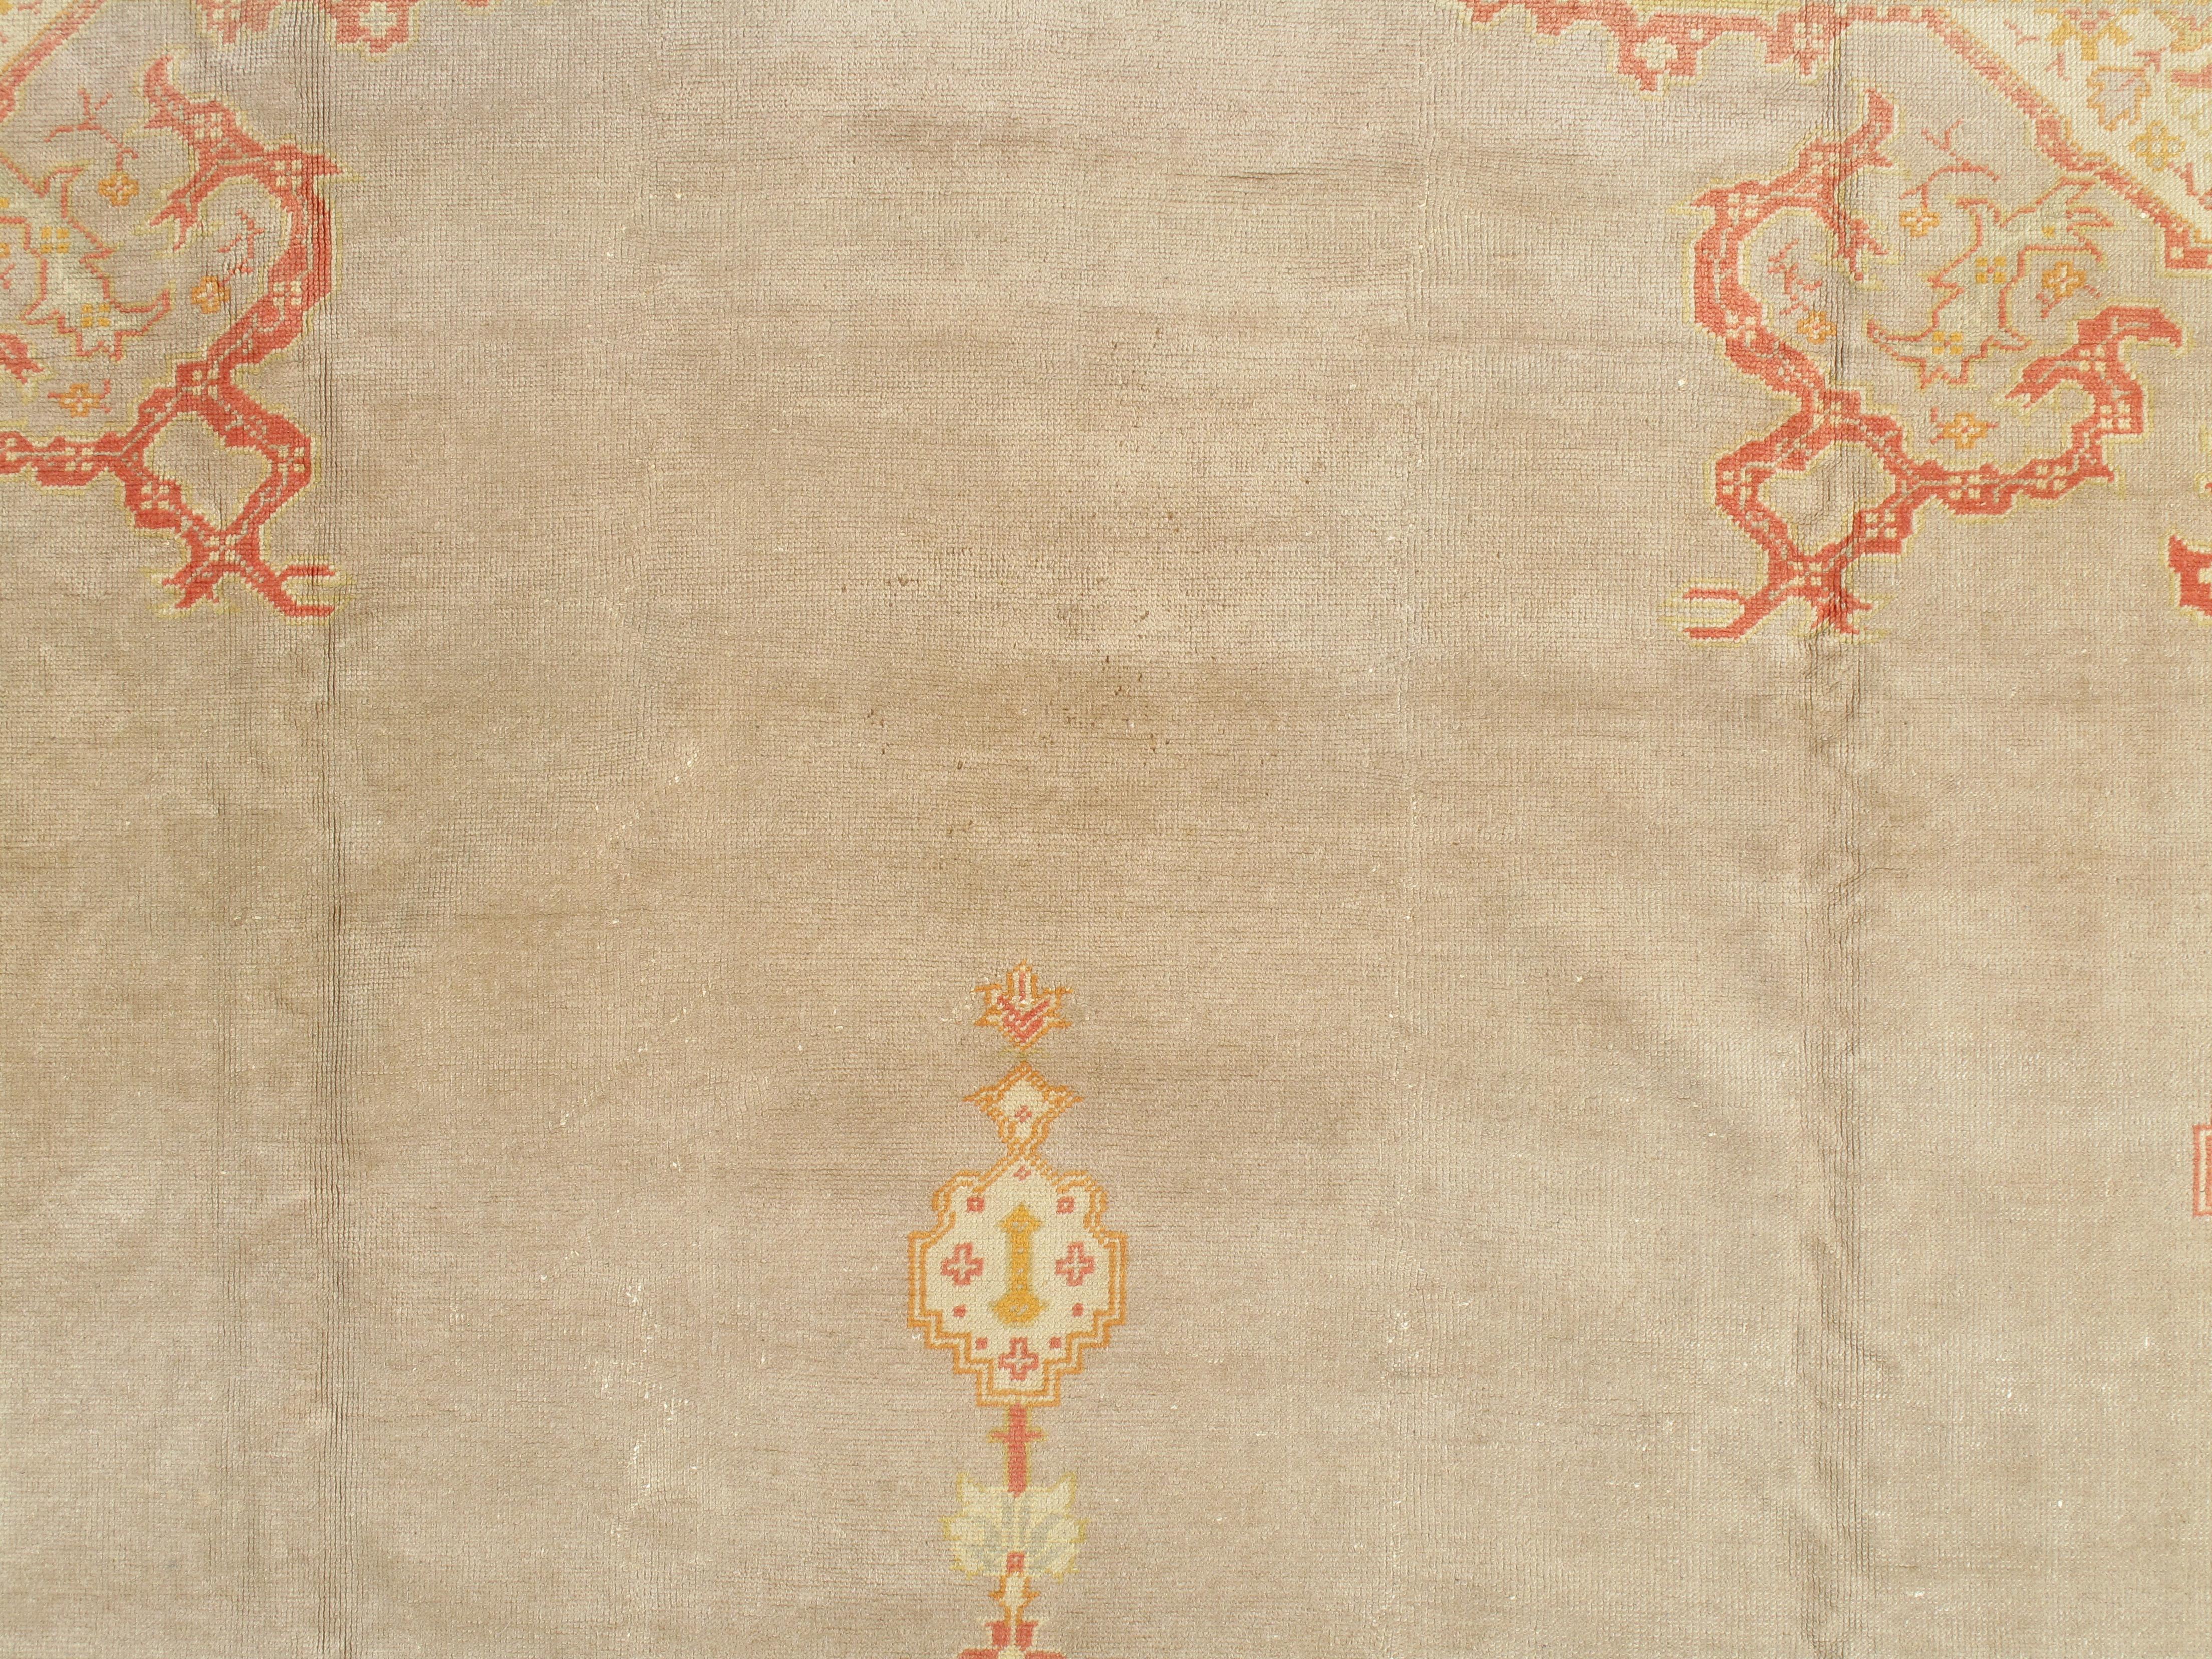 Antique Turkish Oushak Carpet, Handmade Oriental Rug, Gray, Taupe, Saffron Coral 12